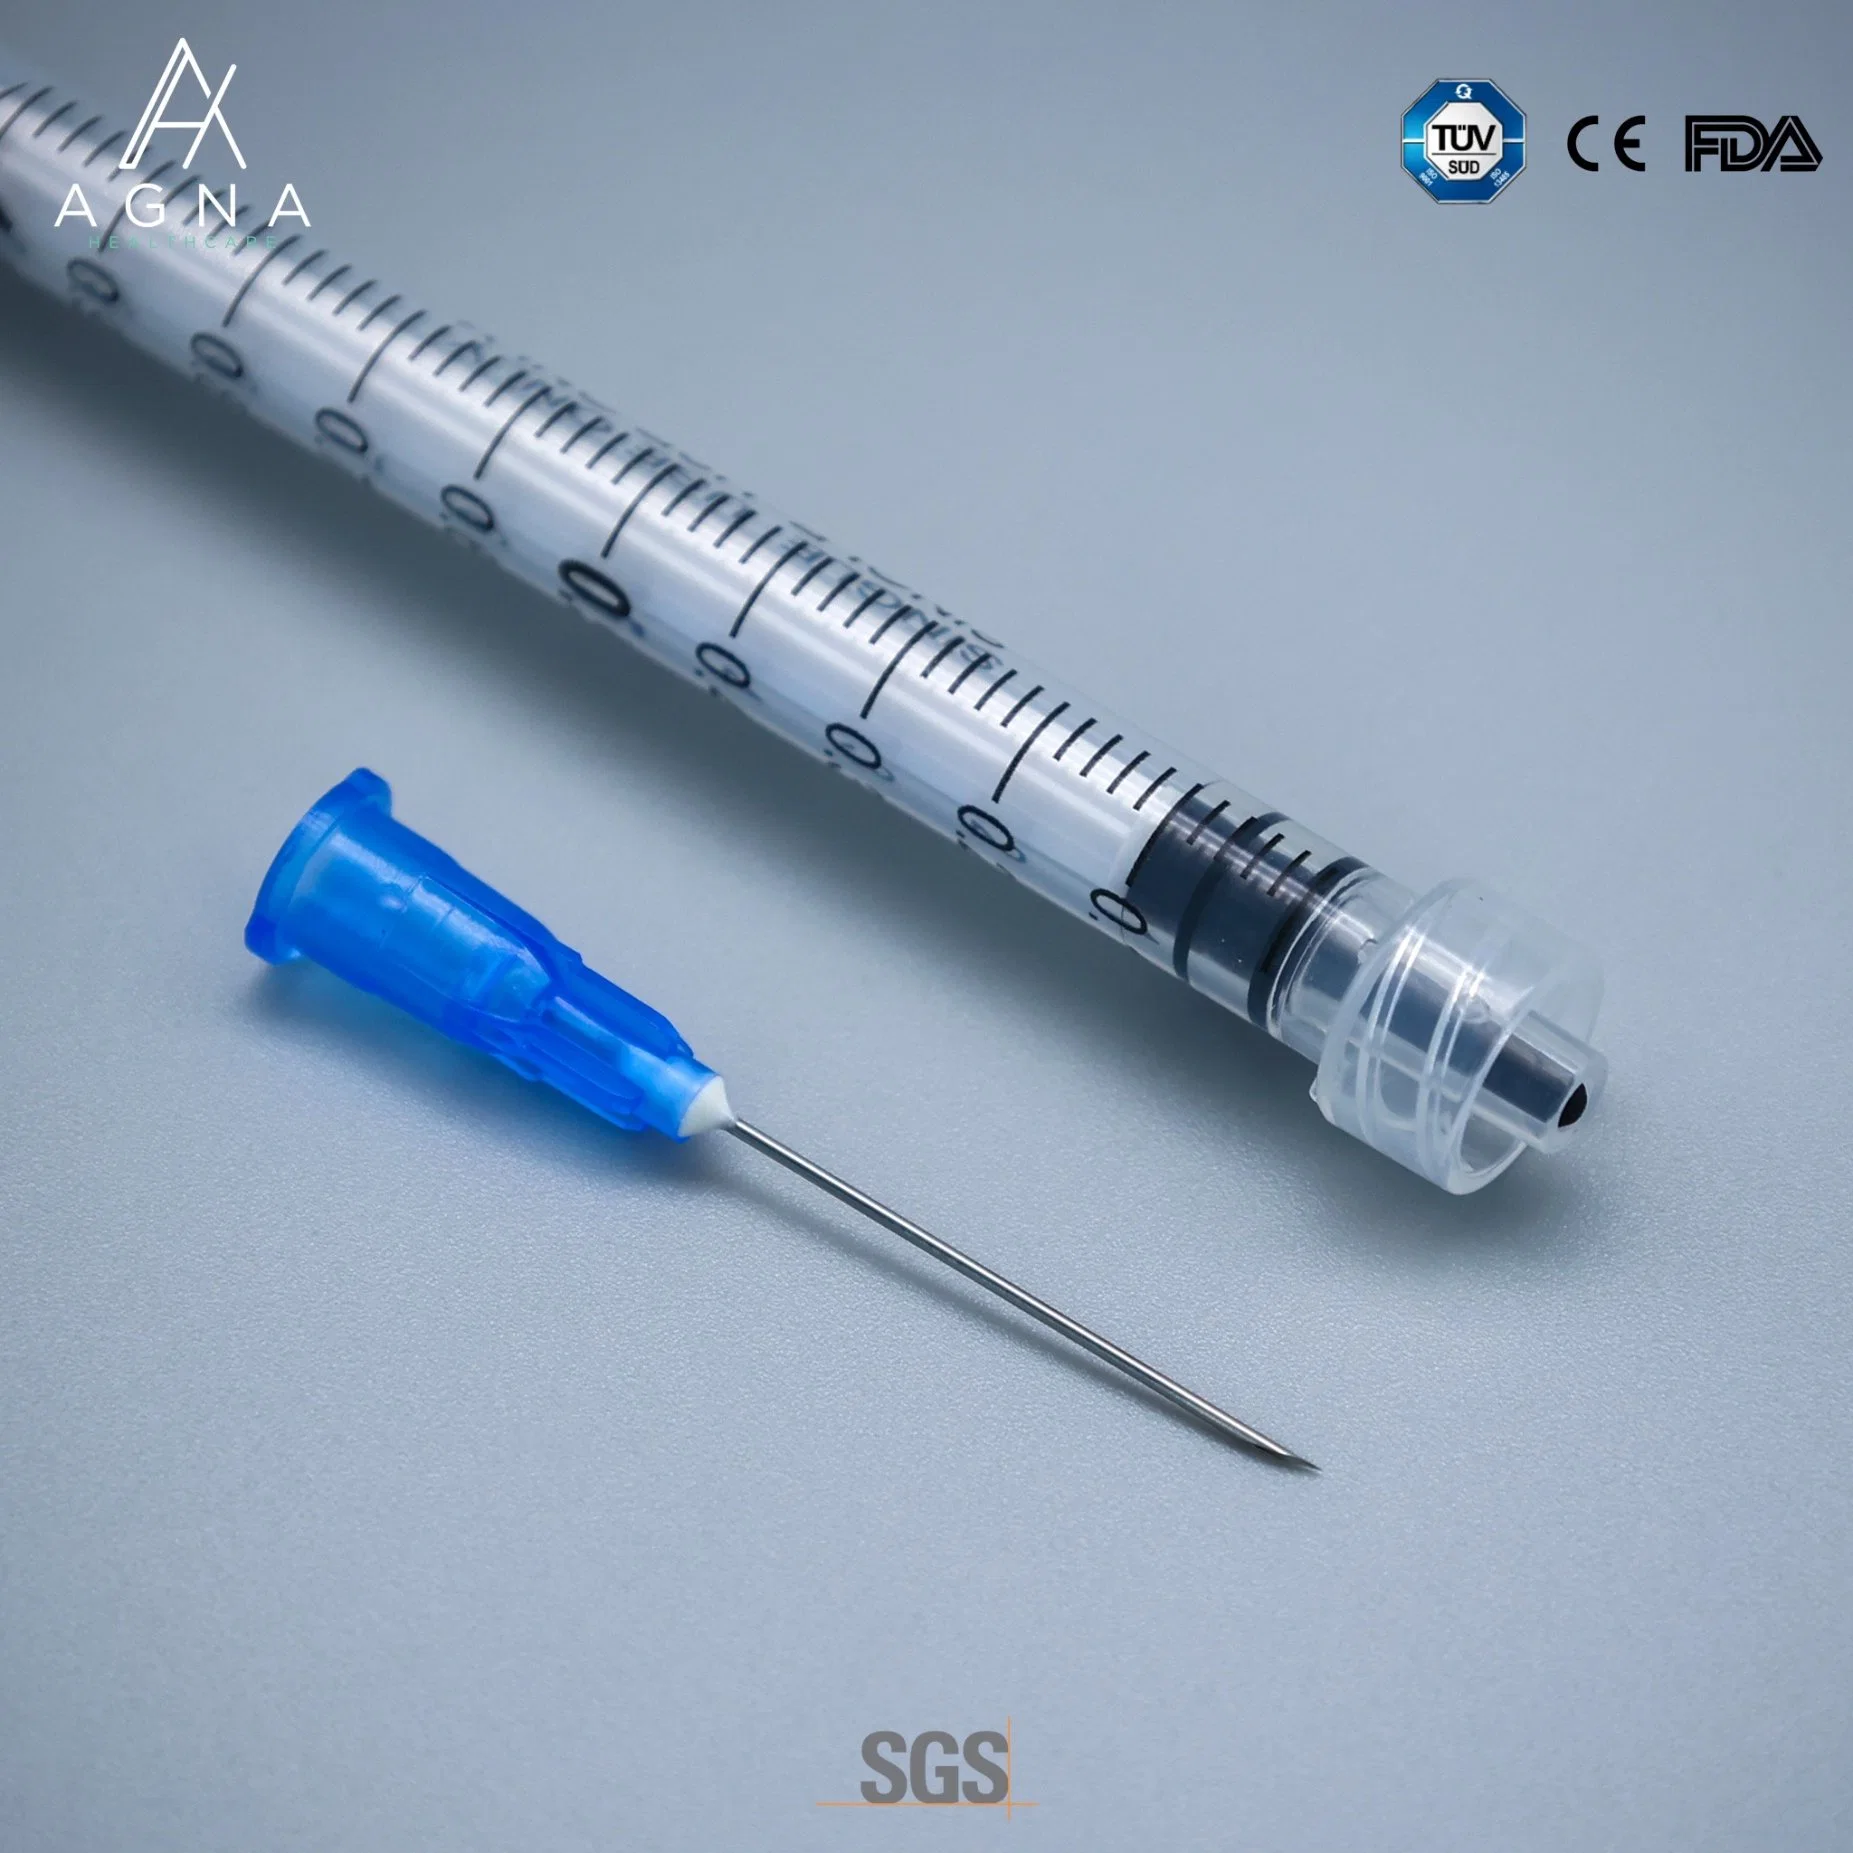 Disposable Vaccine Syringe 1 Ml Luer Lock Vaccine Syringe Needle Medical Instrument